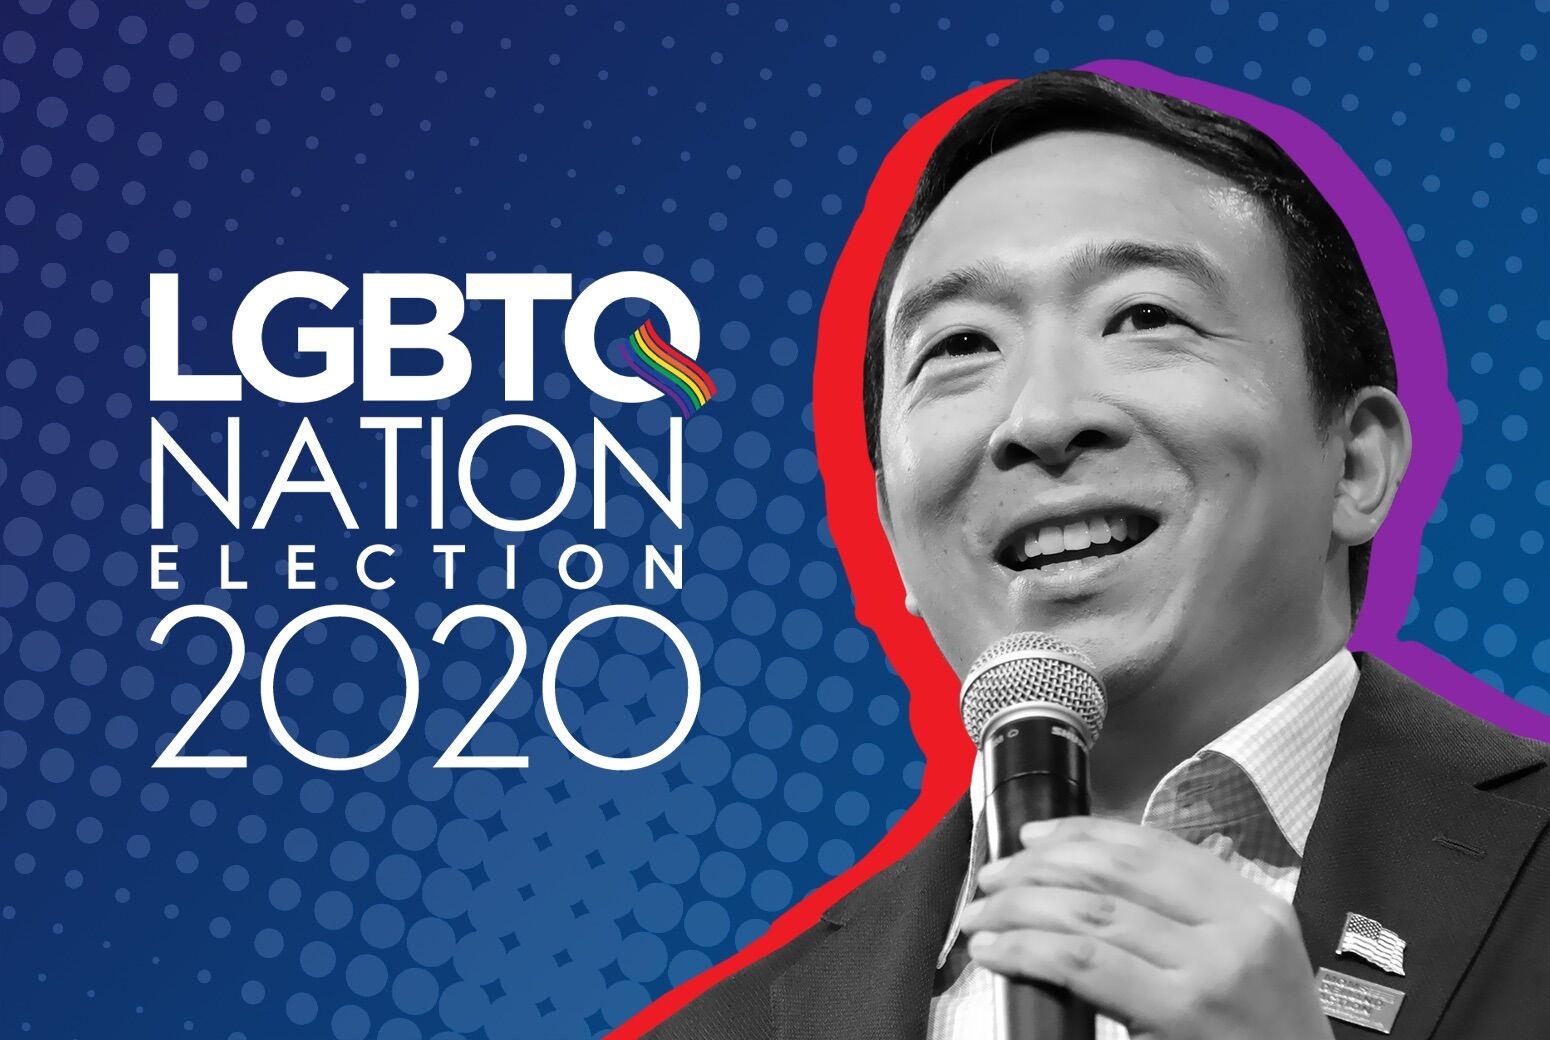 Andrew Yang LGBTQ Nation Election 2020